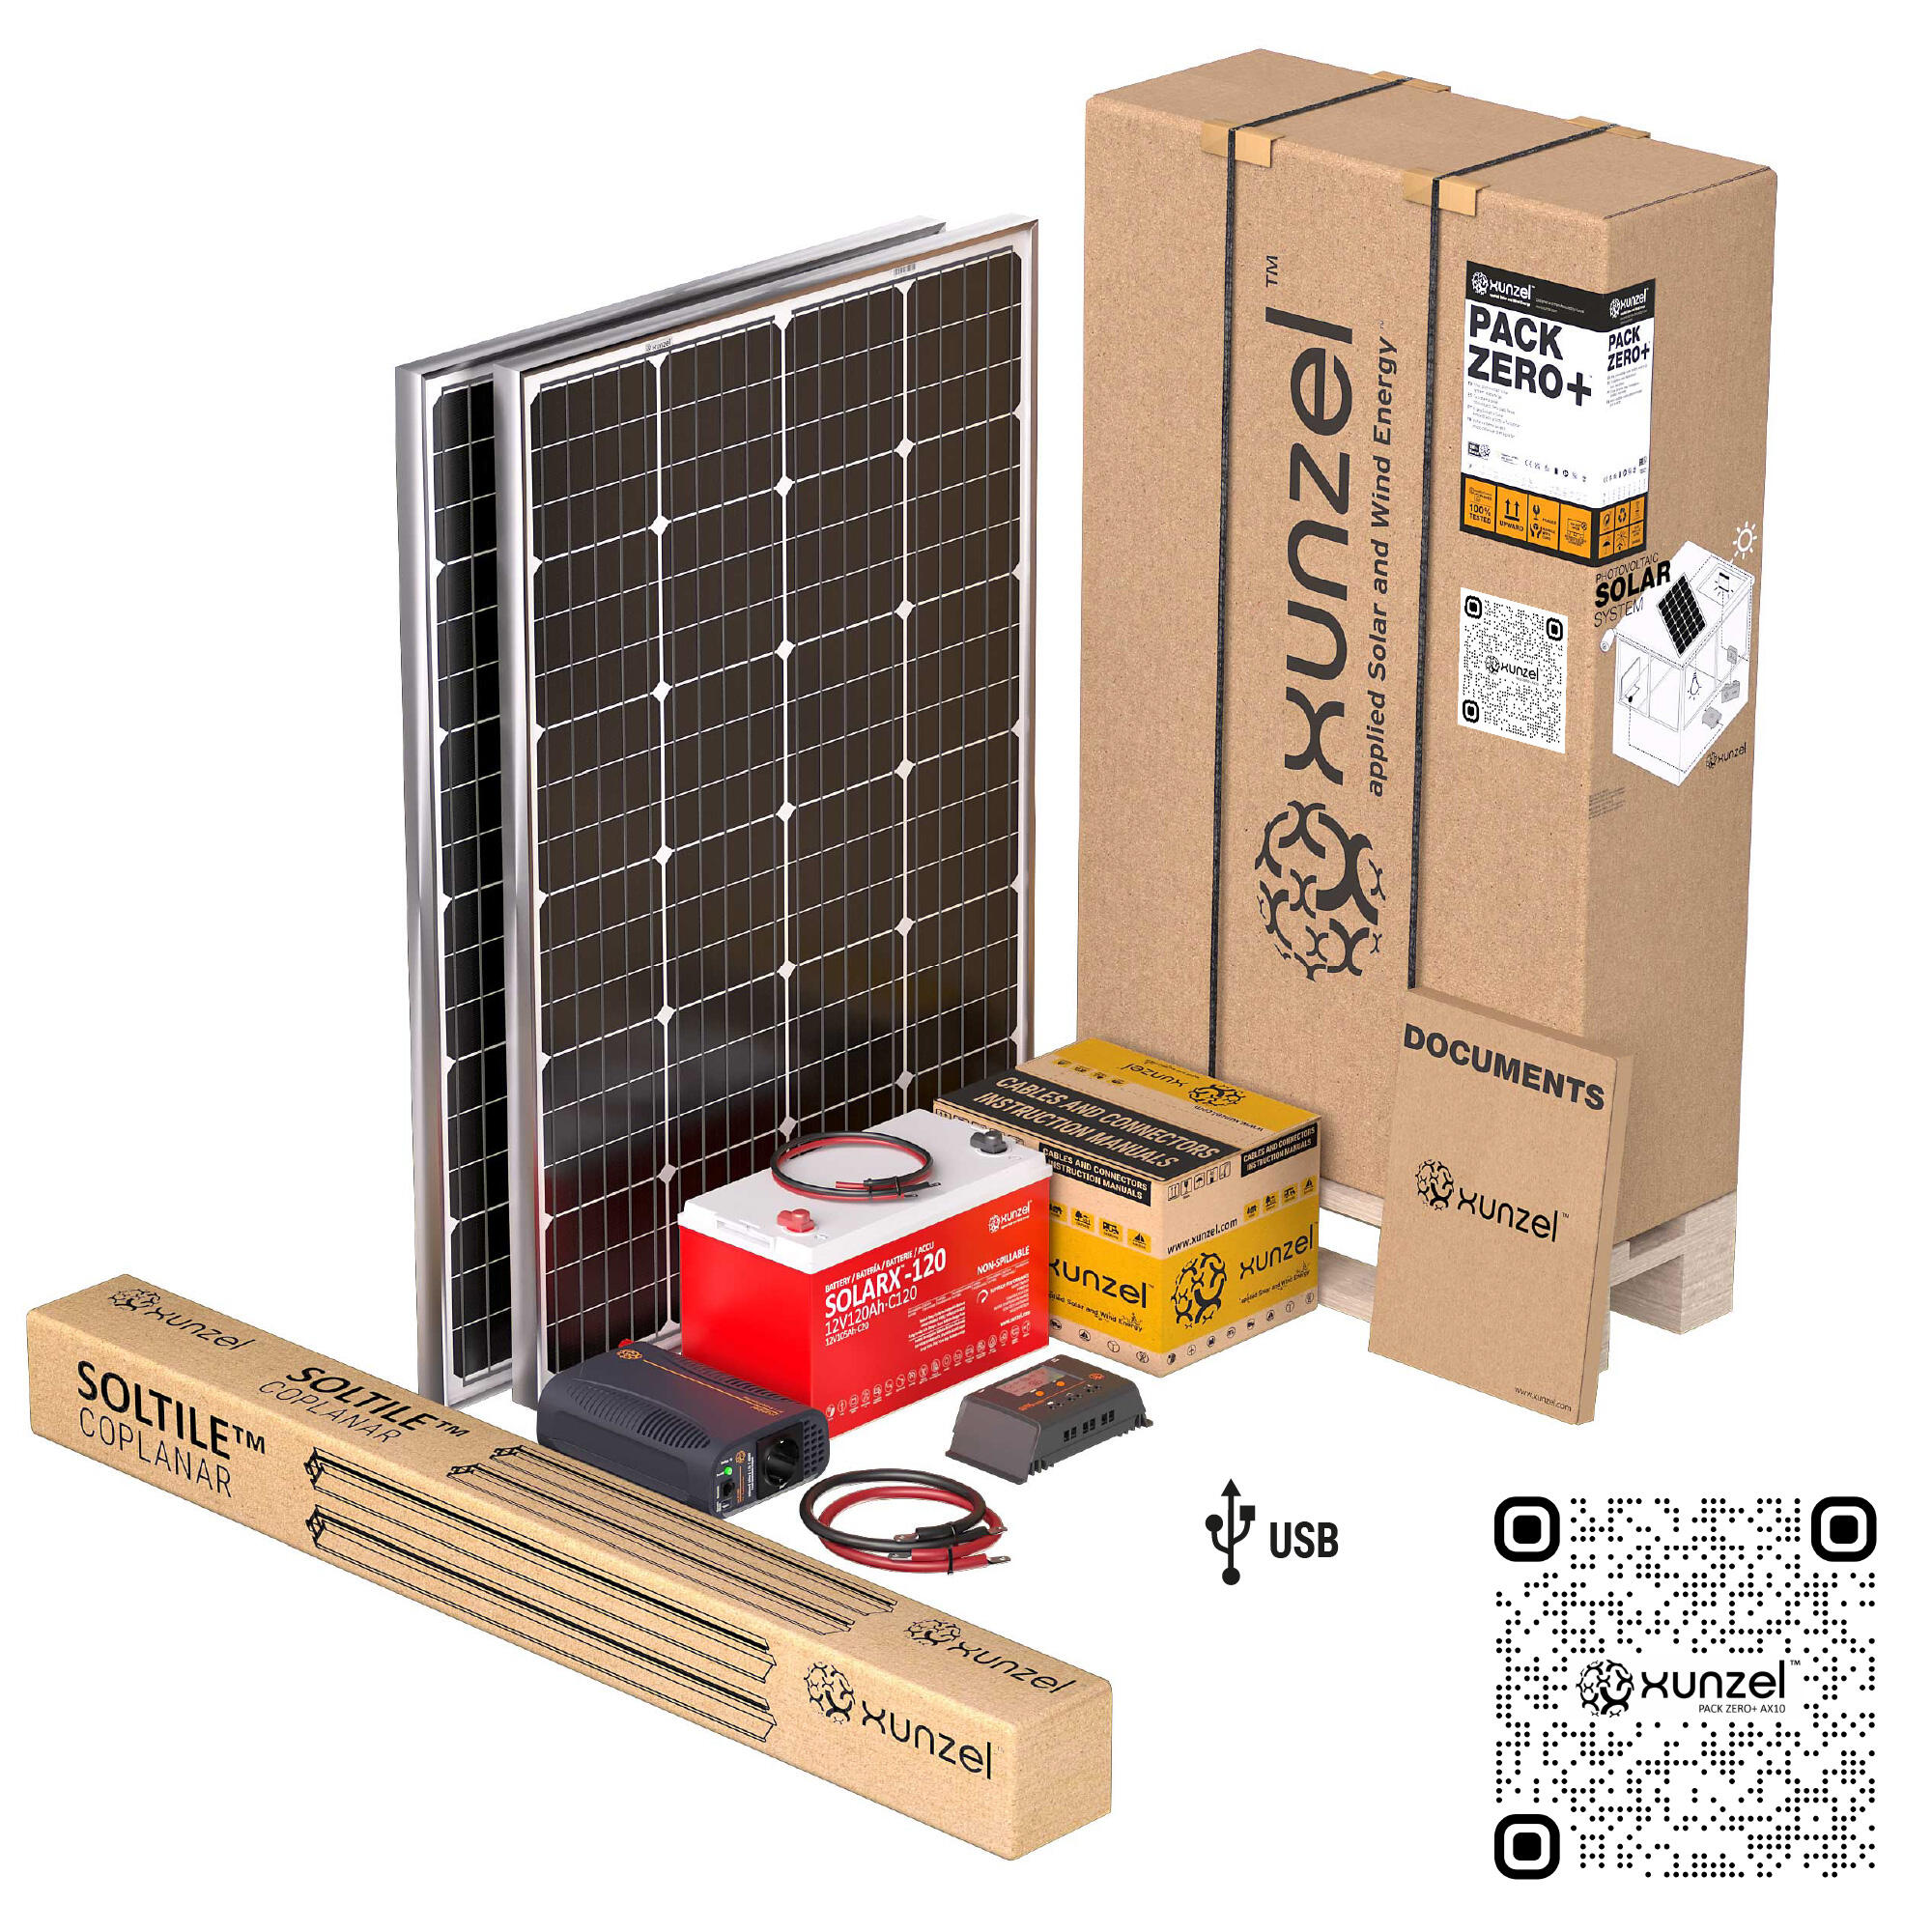 Kit solar pack zero+ax10 xunzel 1400whd, batería 1400wh, inversor 400w, soportes